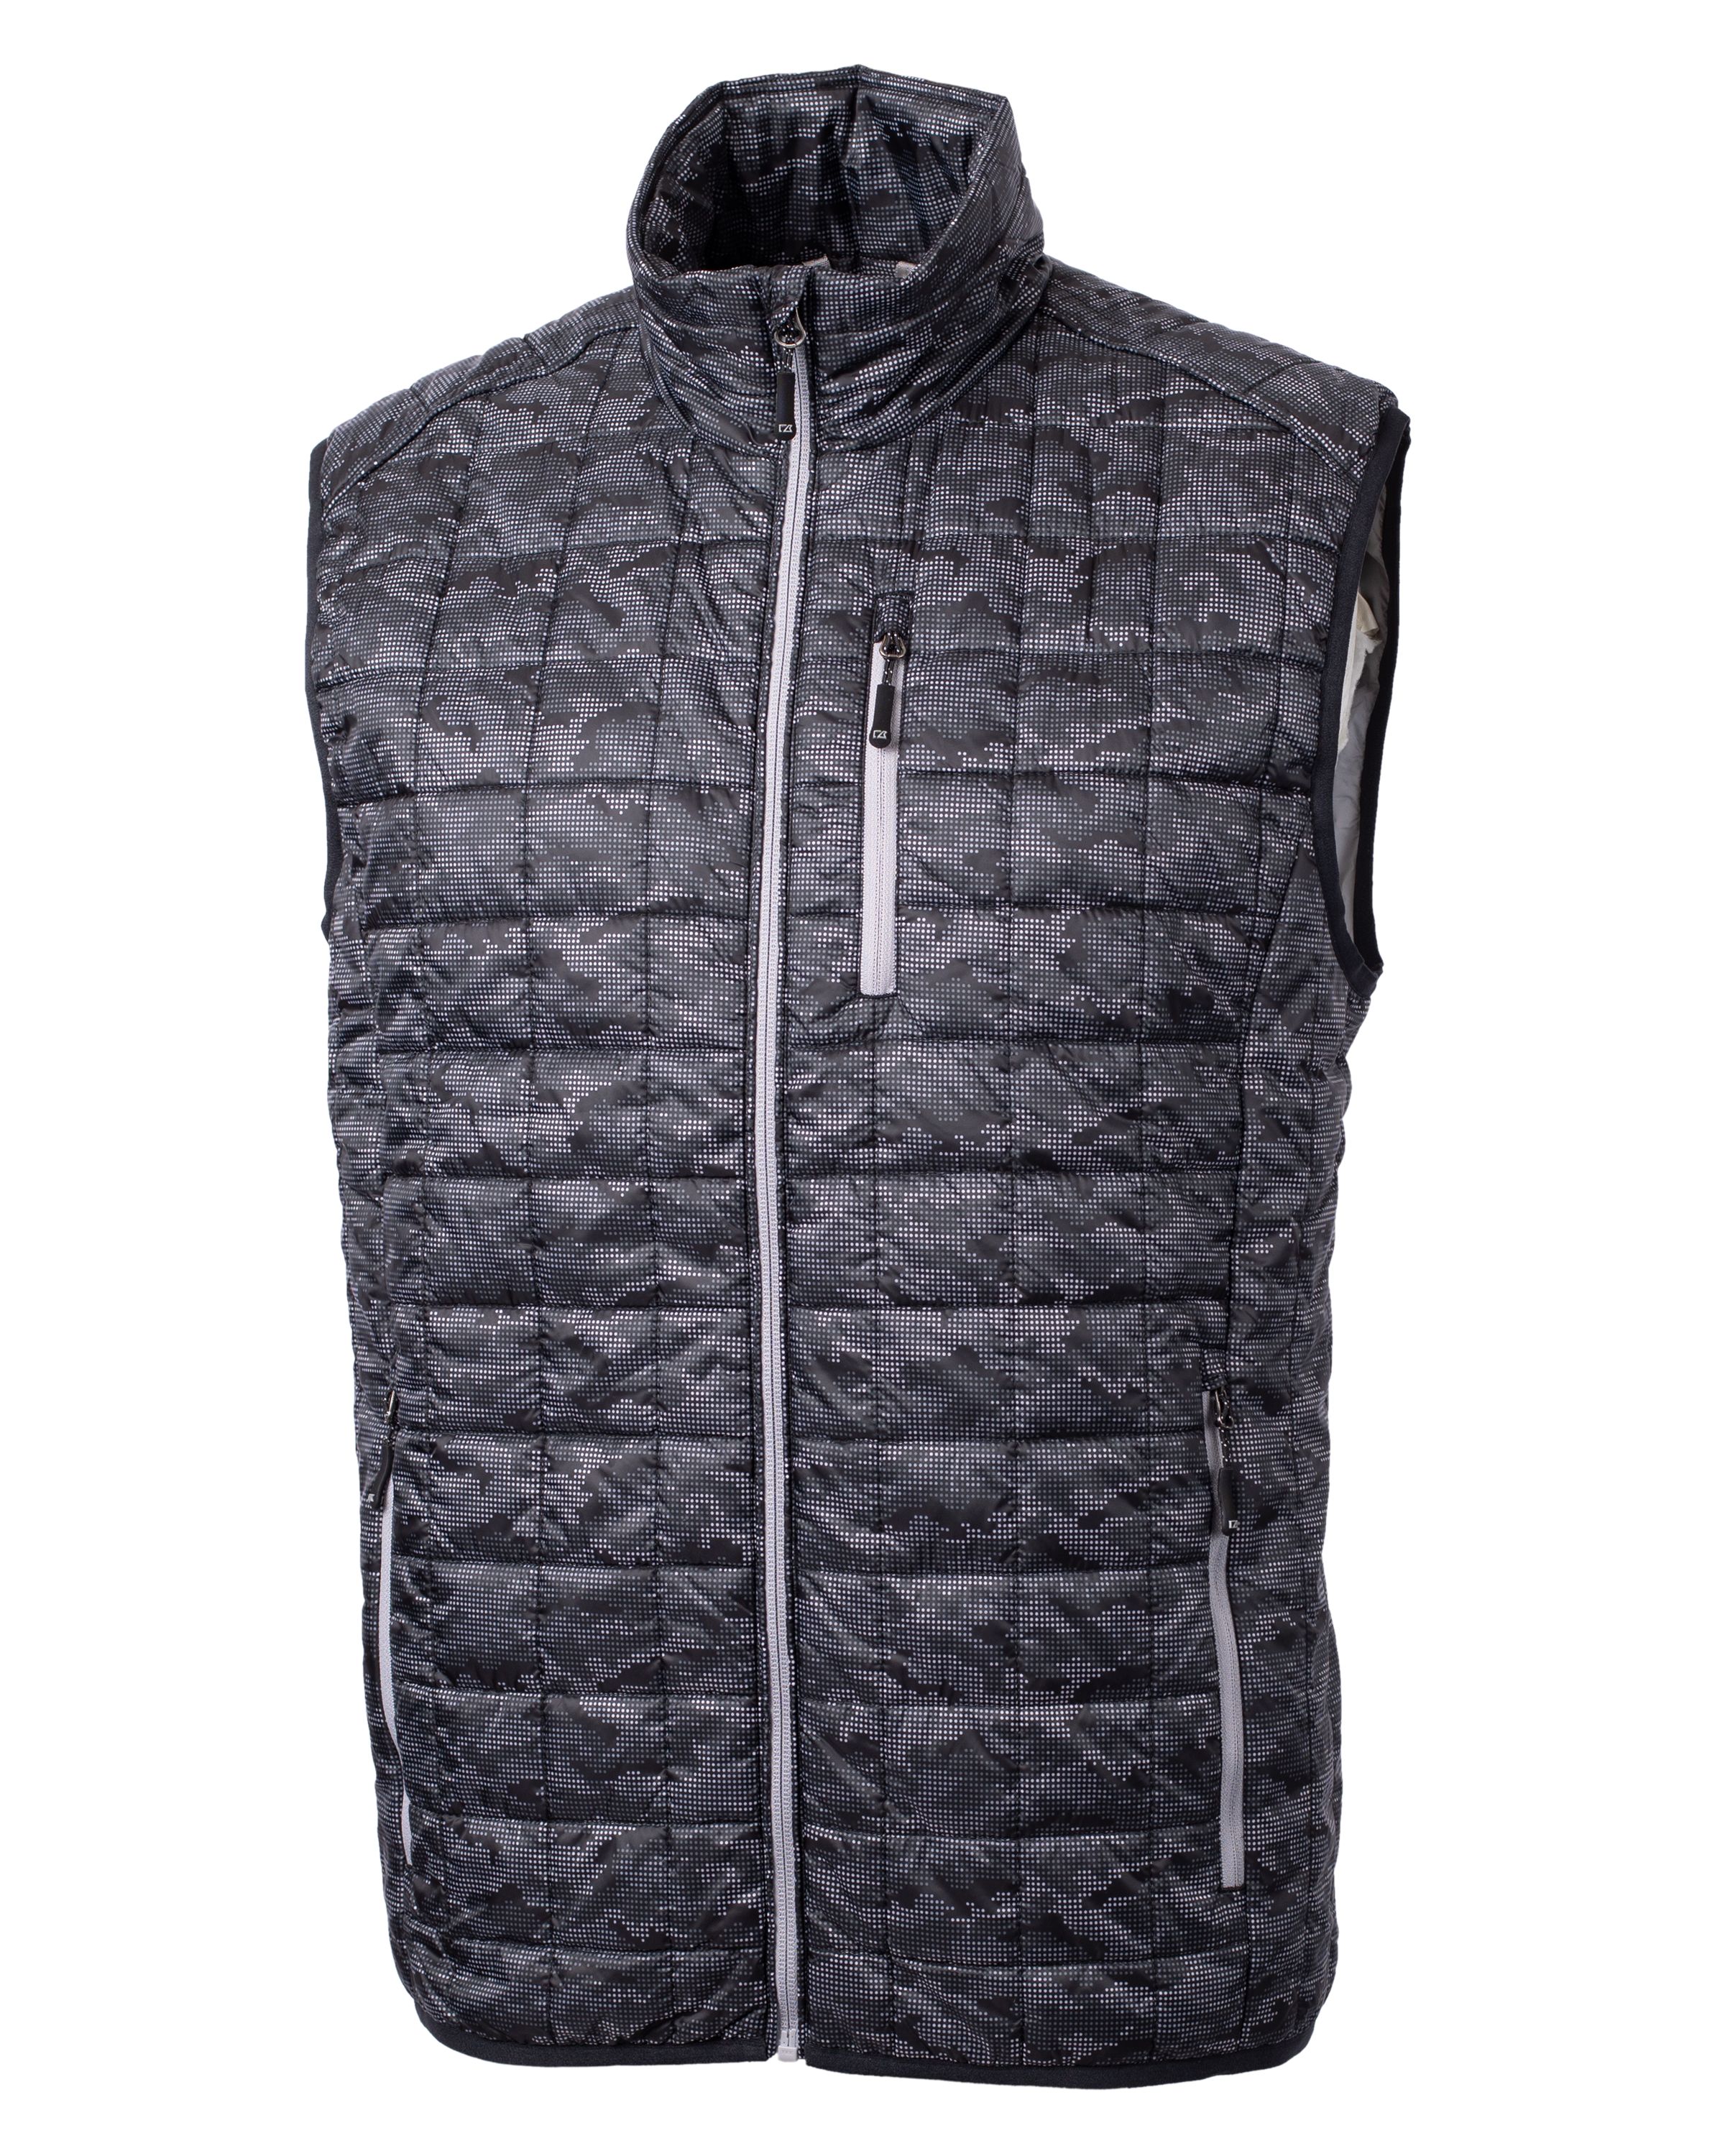 CUTTER & BUCK MCO00069 - Rainier PrimaLoft® Men's Eco Insulated Full Zip Printed Puffer Vest